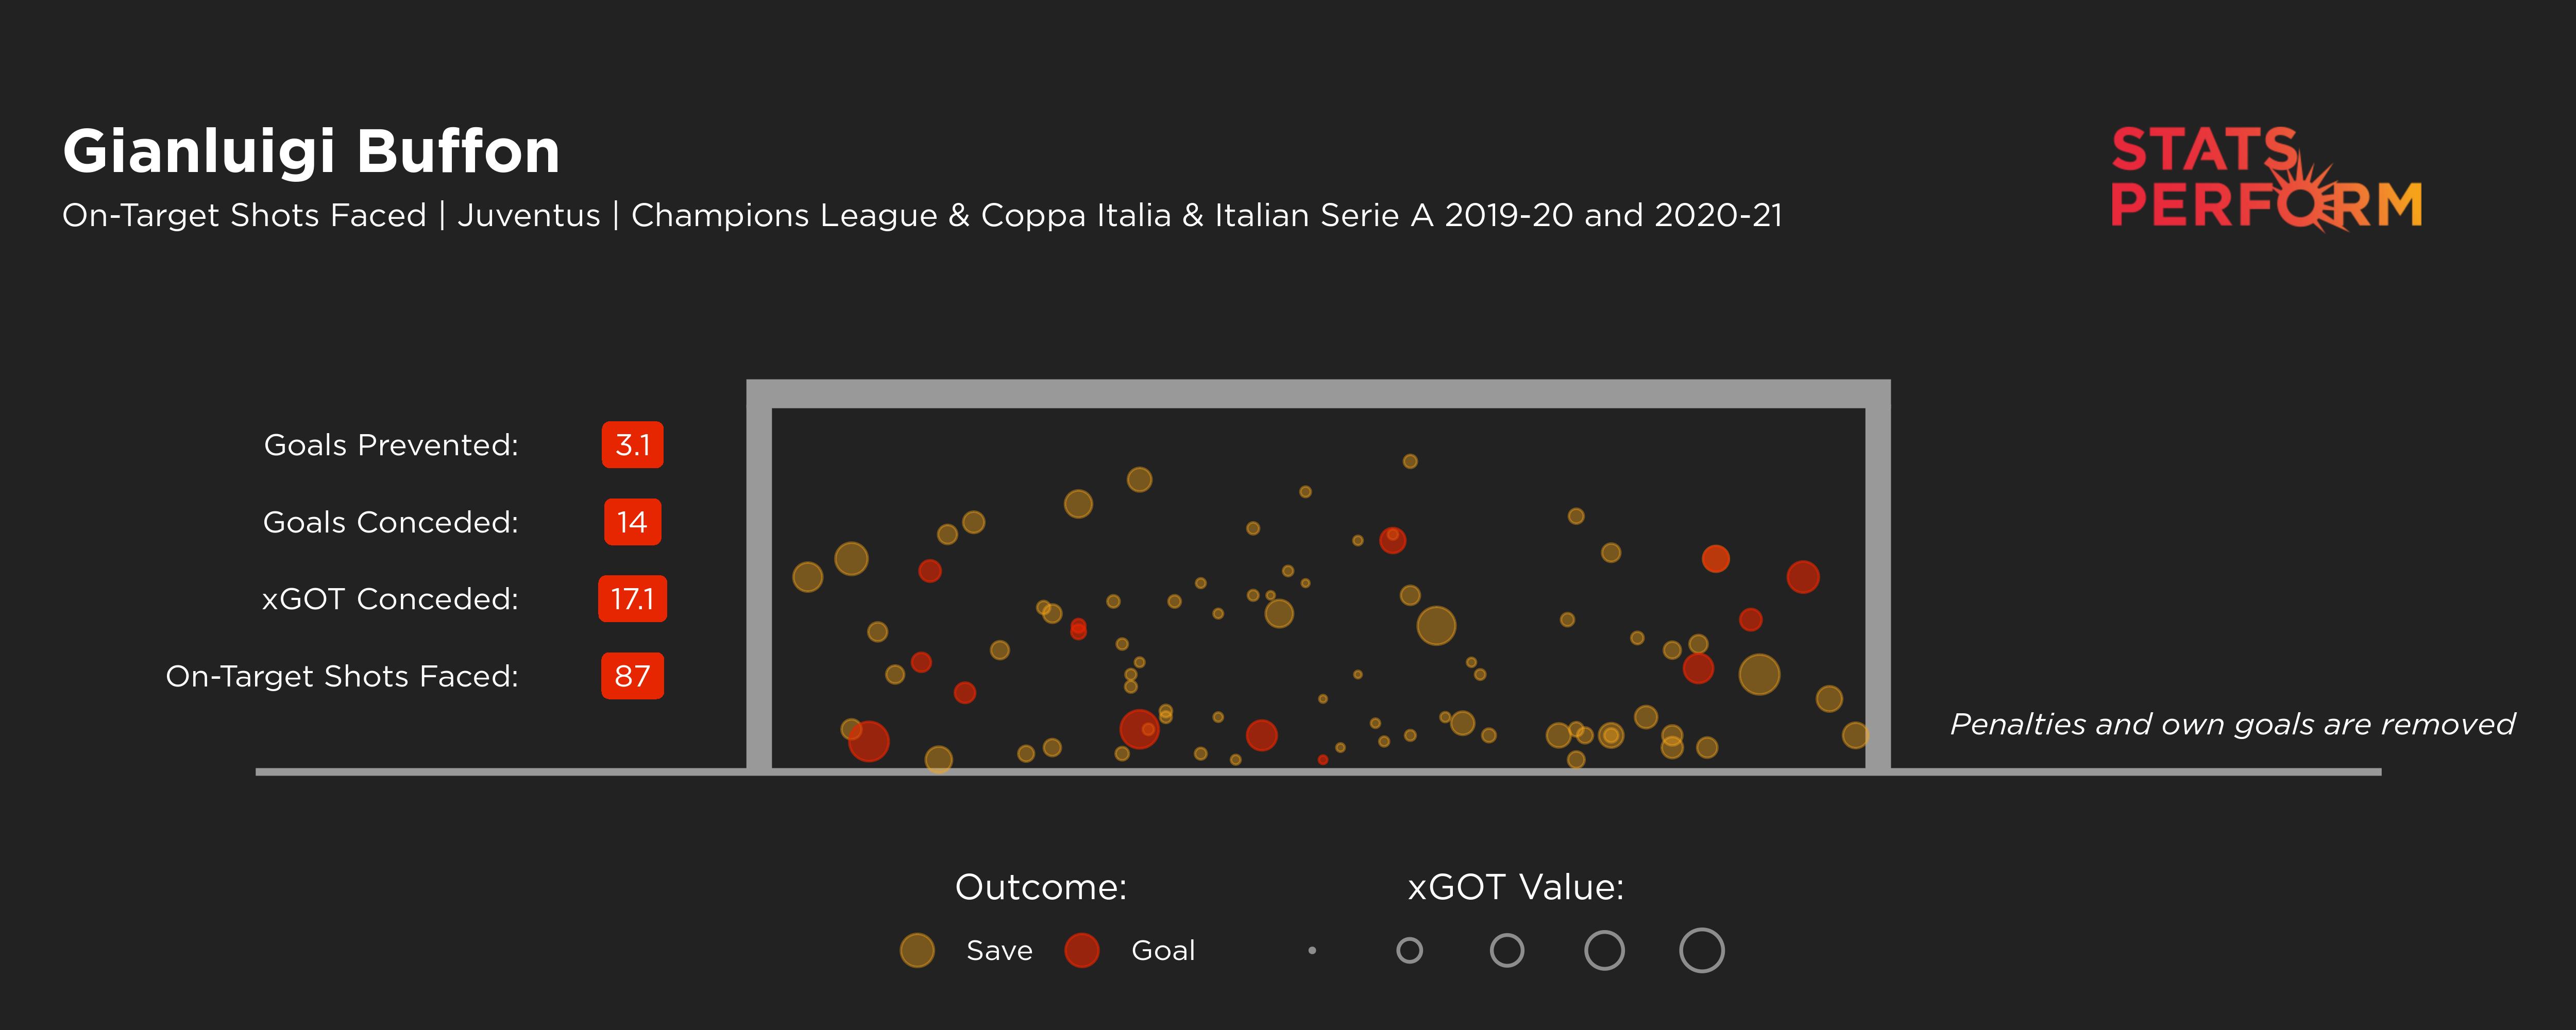 Gianluigi Buffon's expected goals on target against